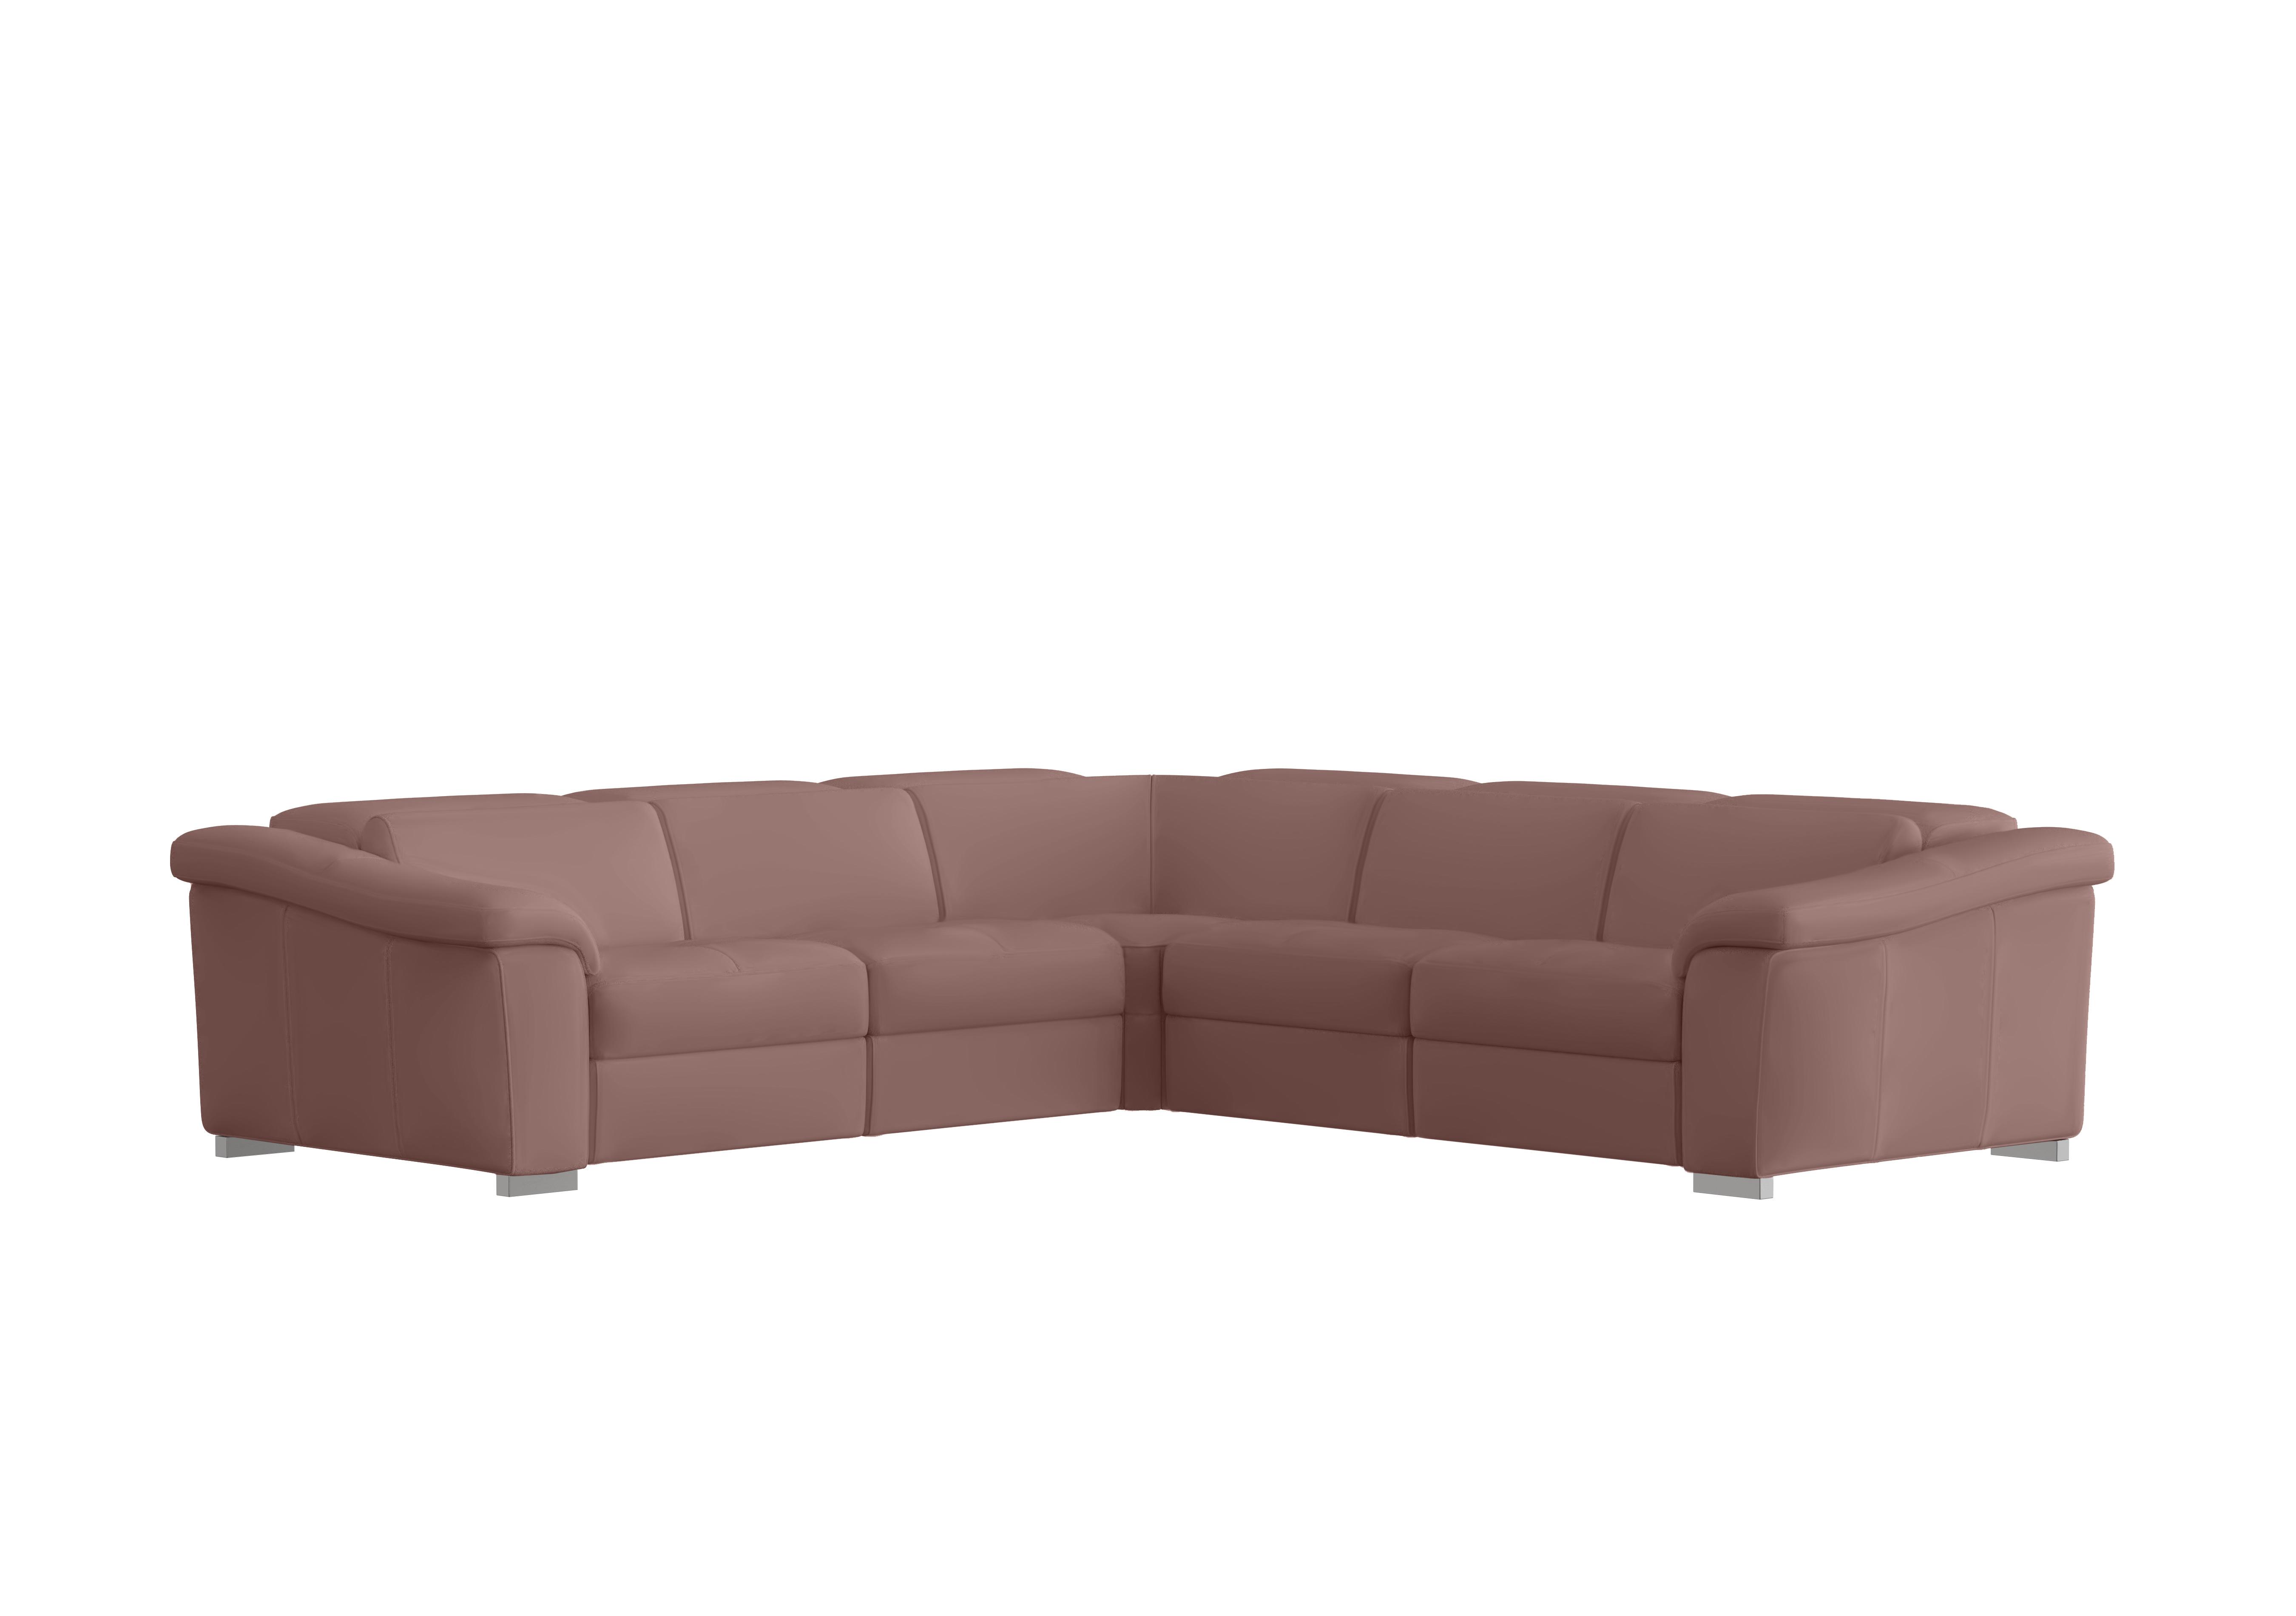 Galileo Leather Large Corner Sofa in Botero Cipria 2160 Ch on Furniture Village